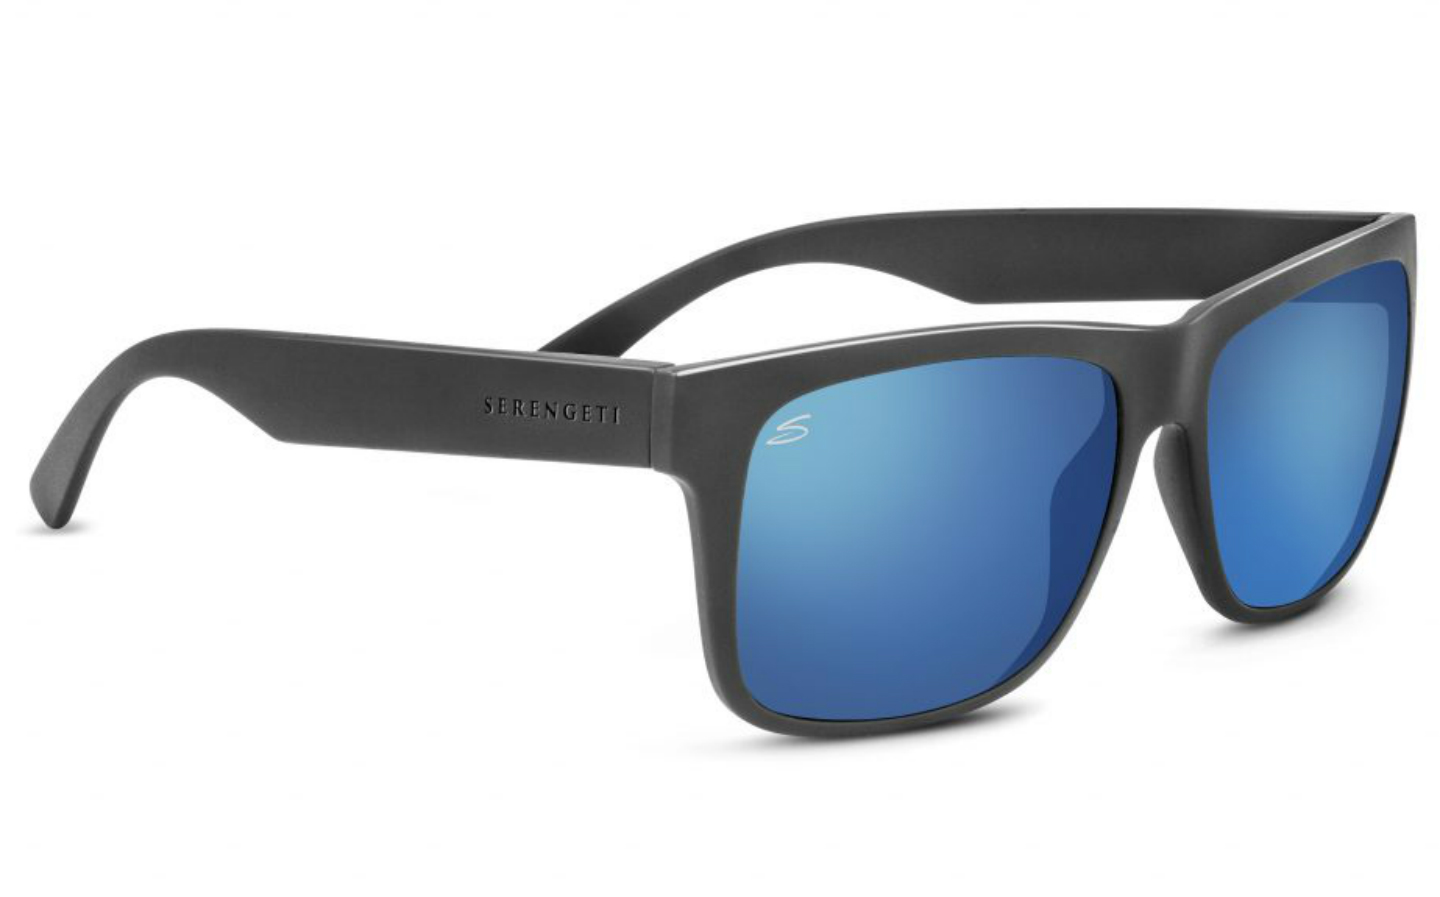 Serengeti-Positano-sunglasses-for-drivers-reviewed